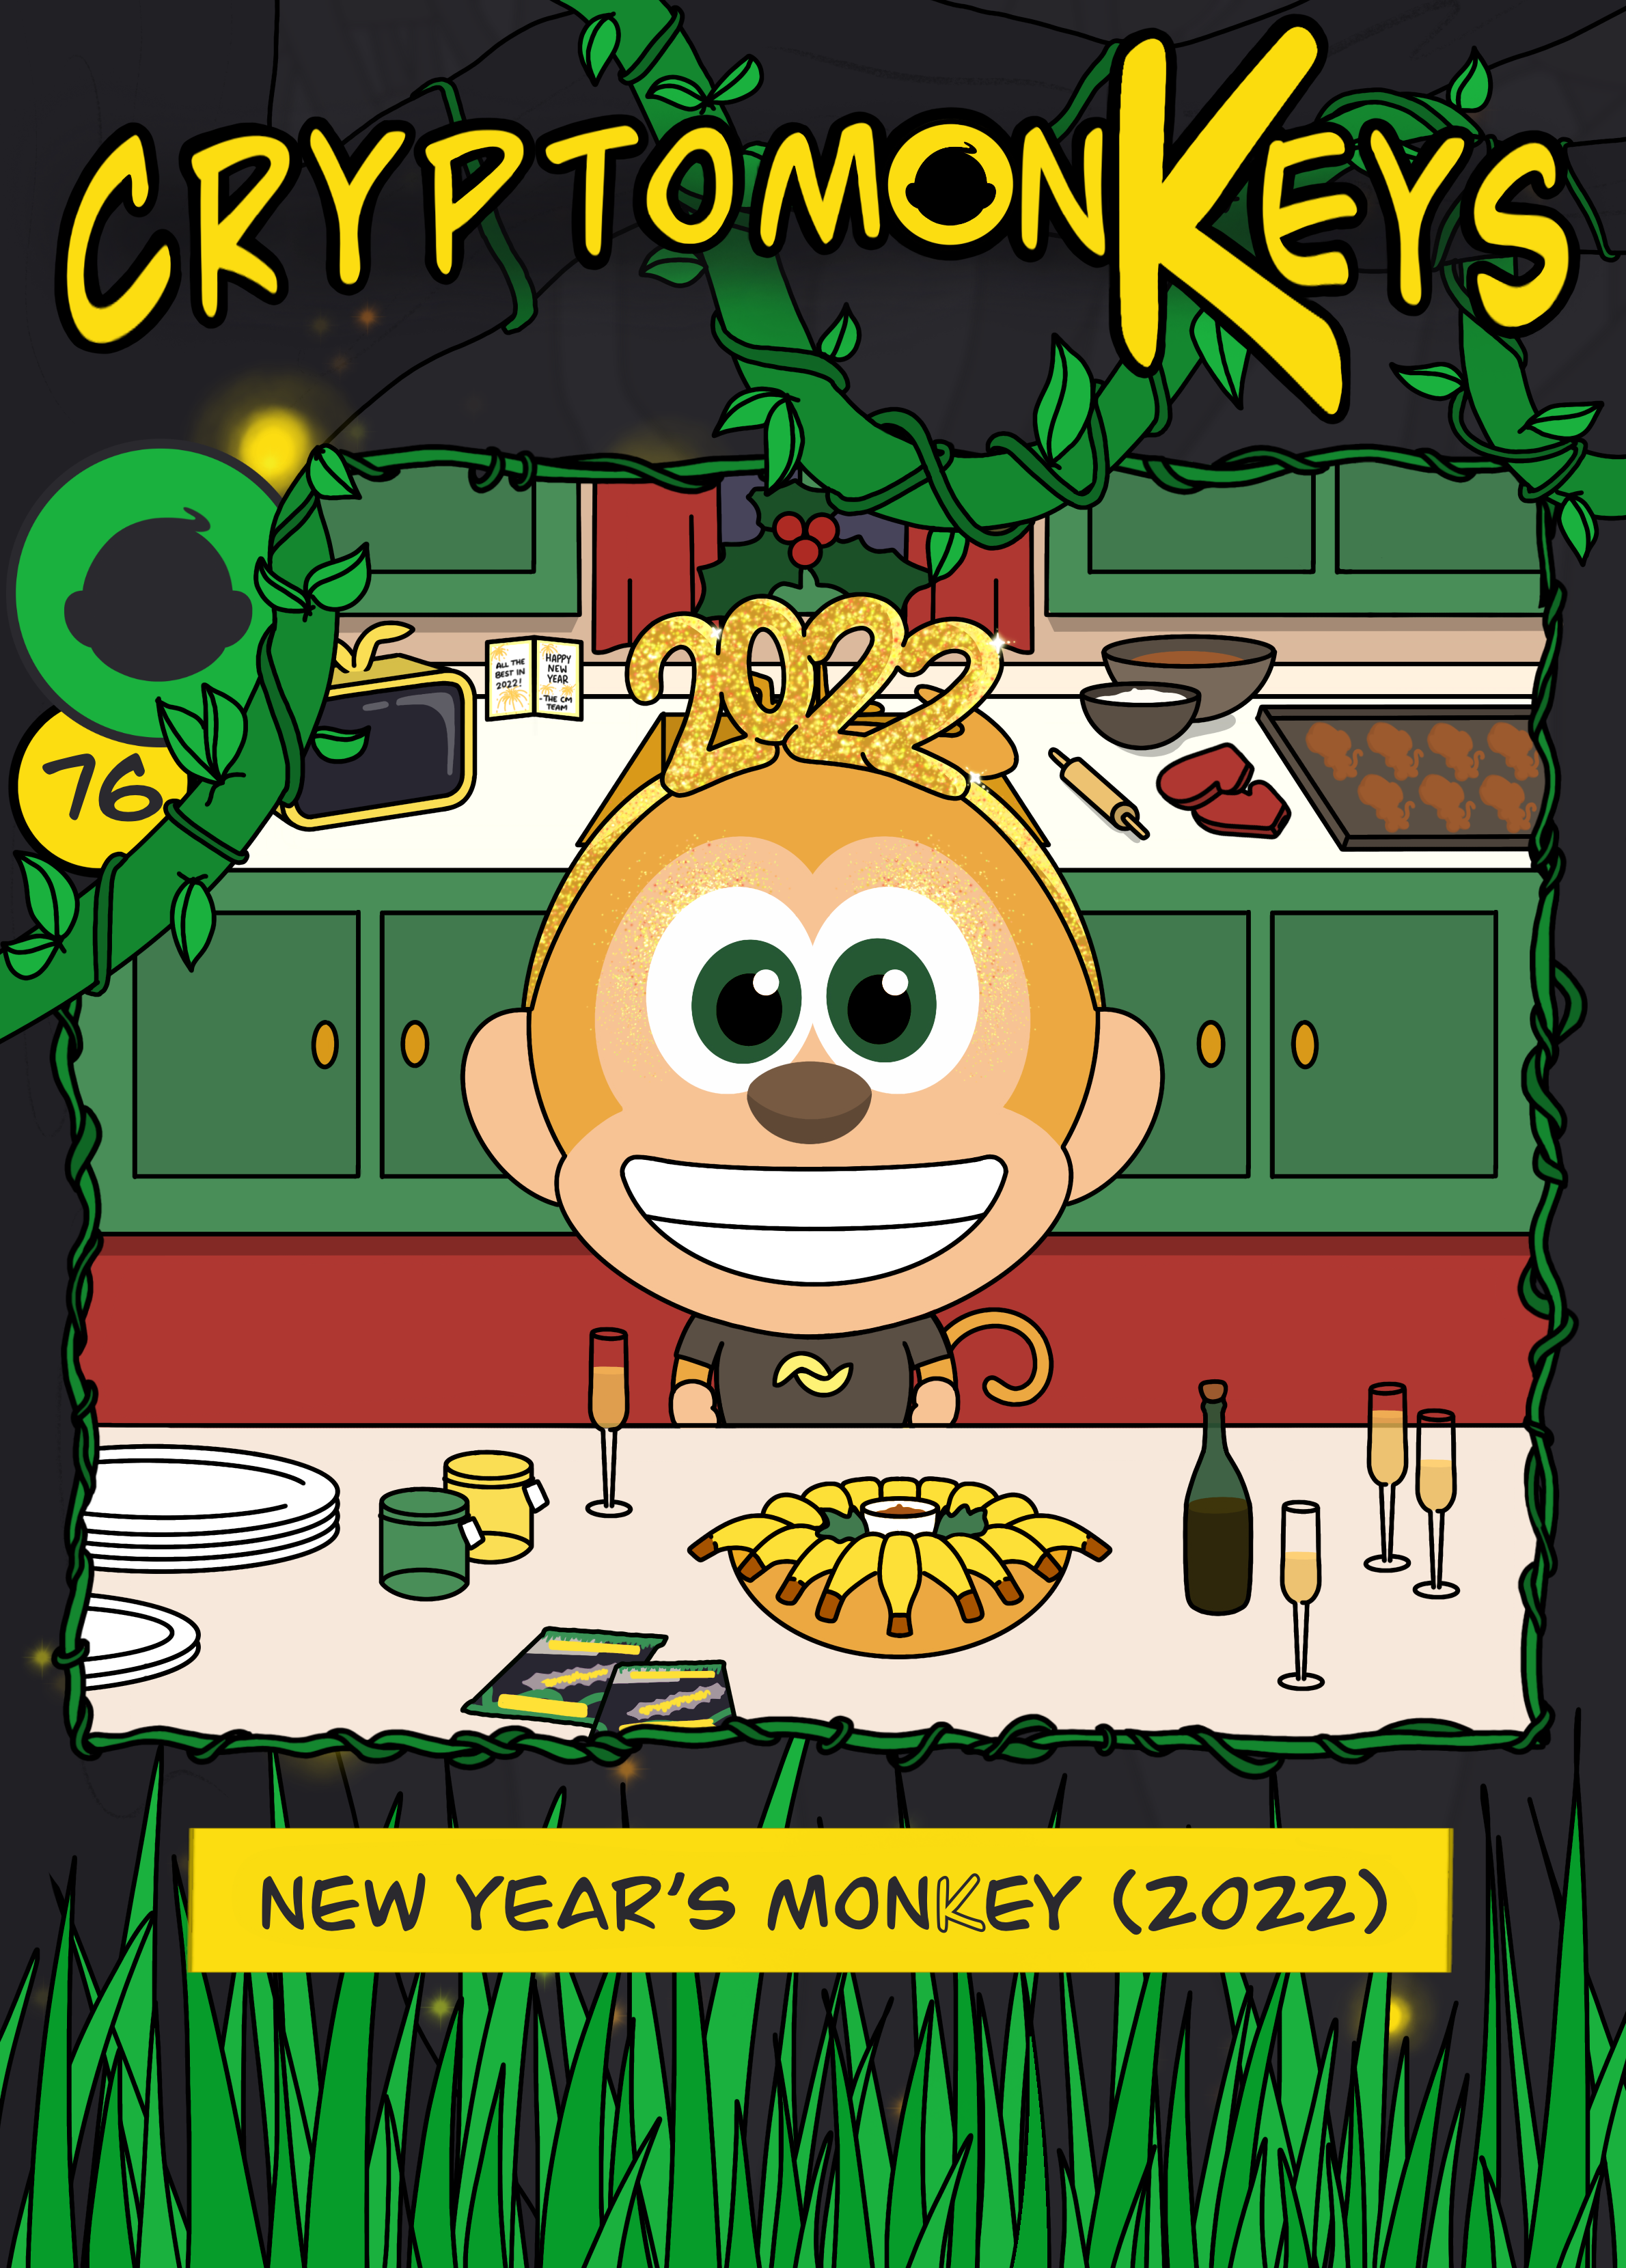 New Year's monKey (2022)